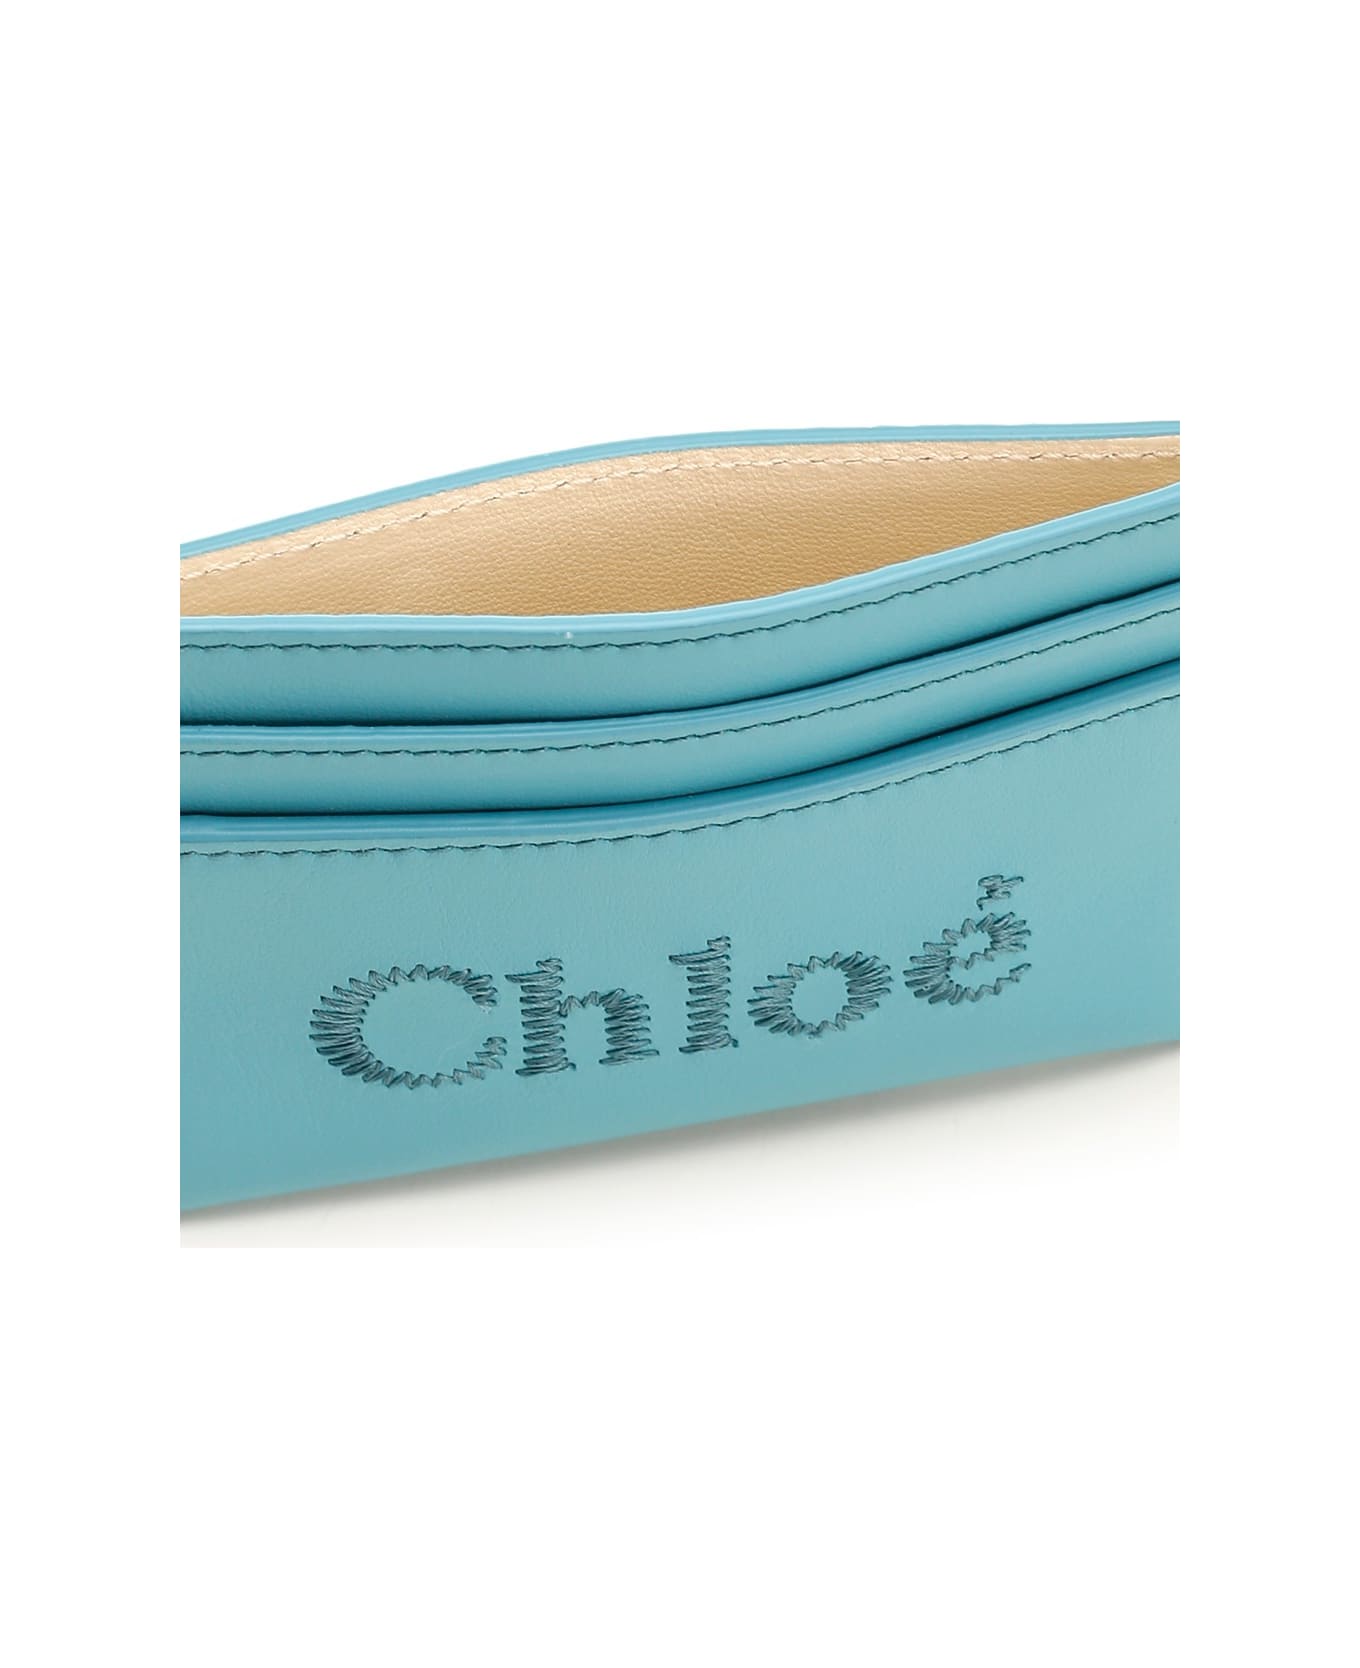 Chloé 'sense' Card Holder - Light blue